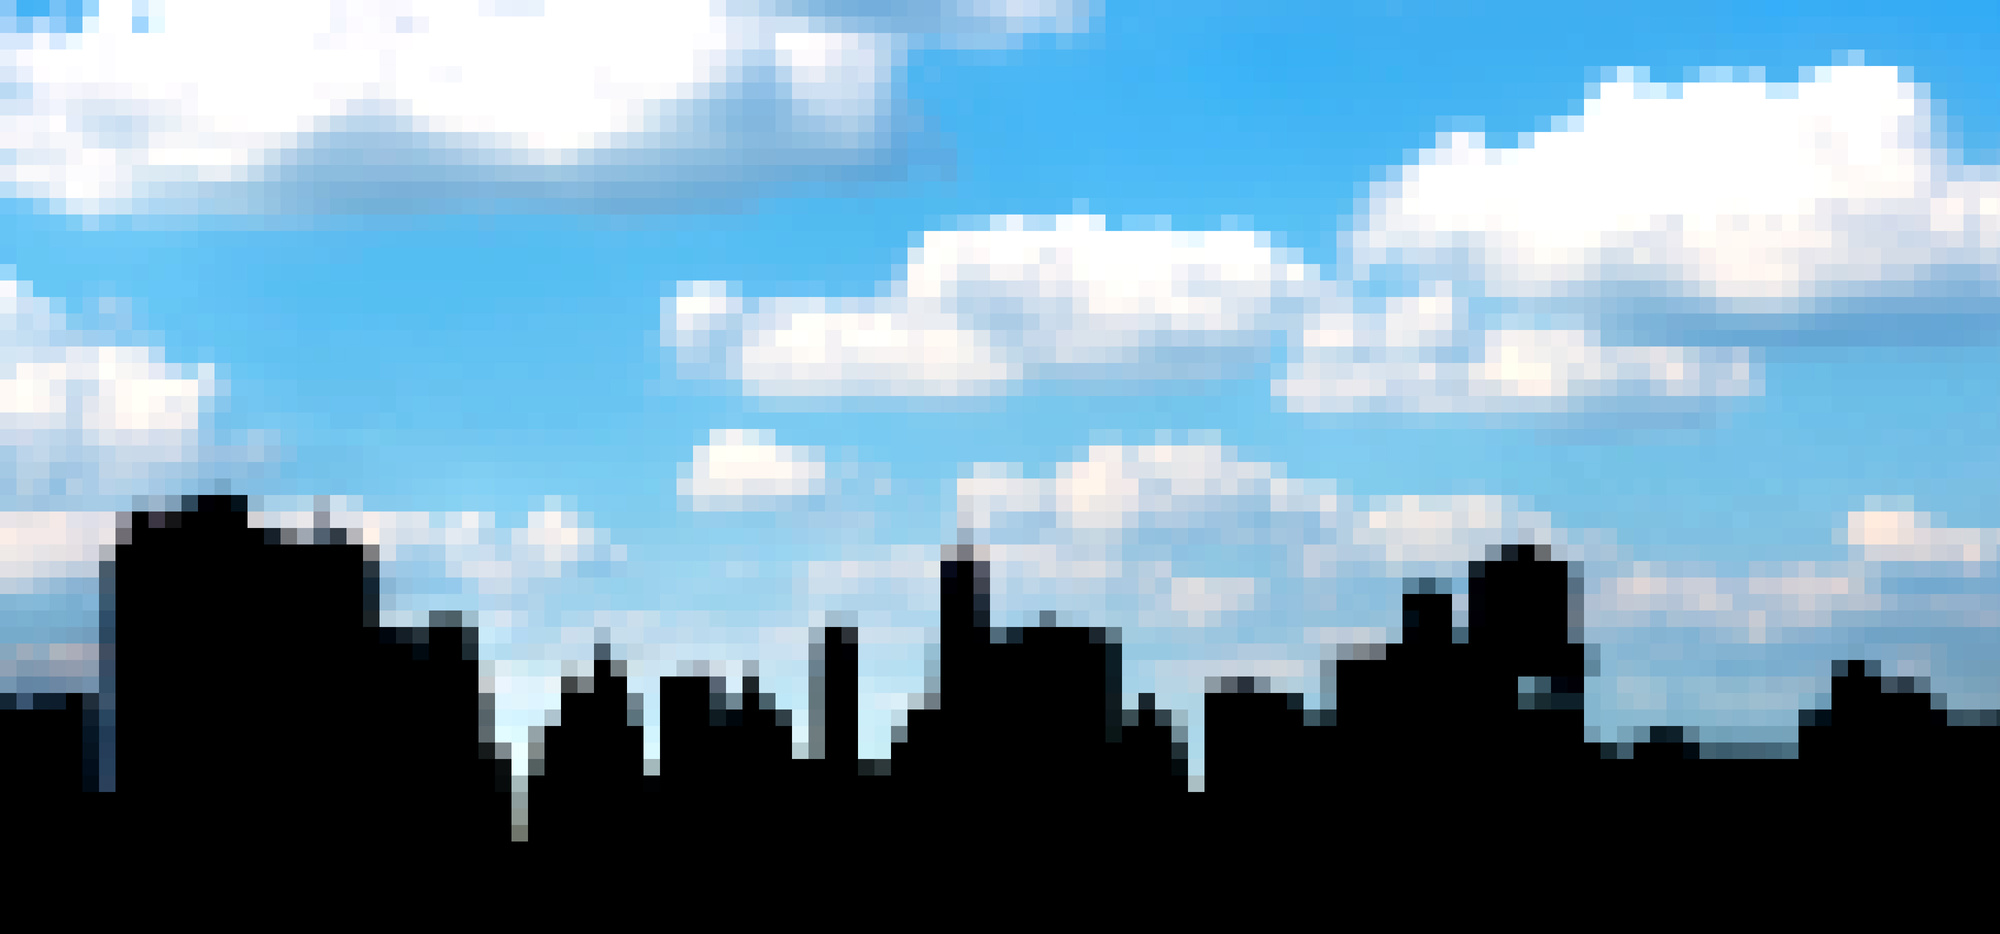 New York City panoramic skyline buildings with pixelated 8-bit e